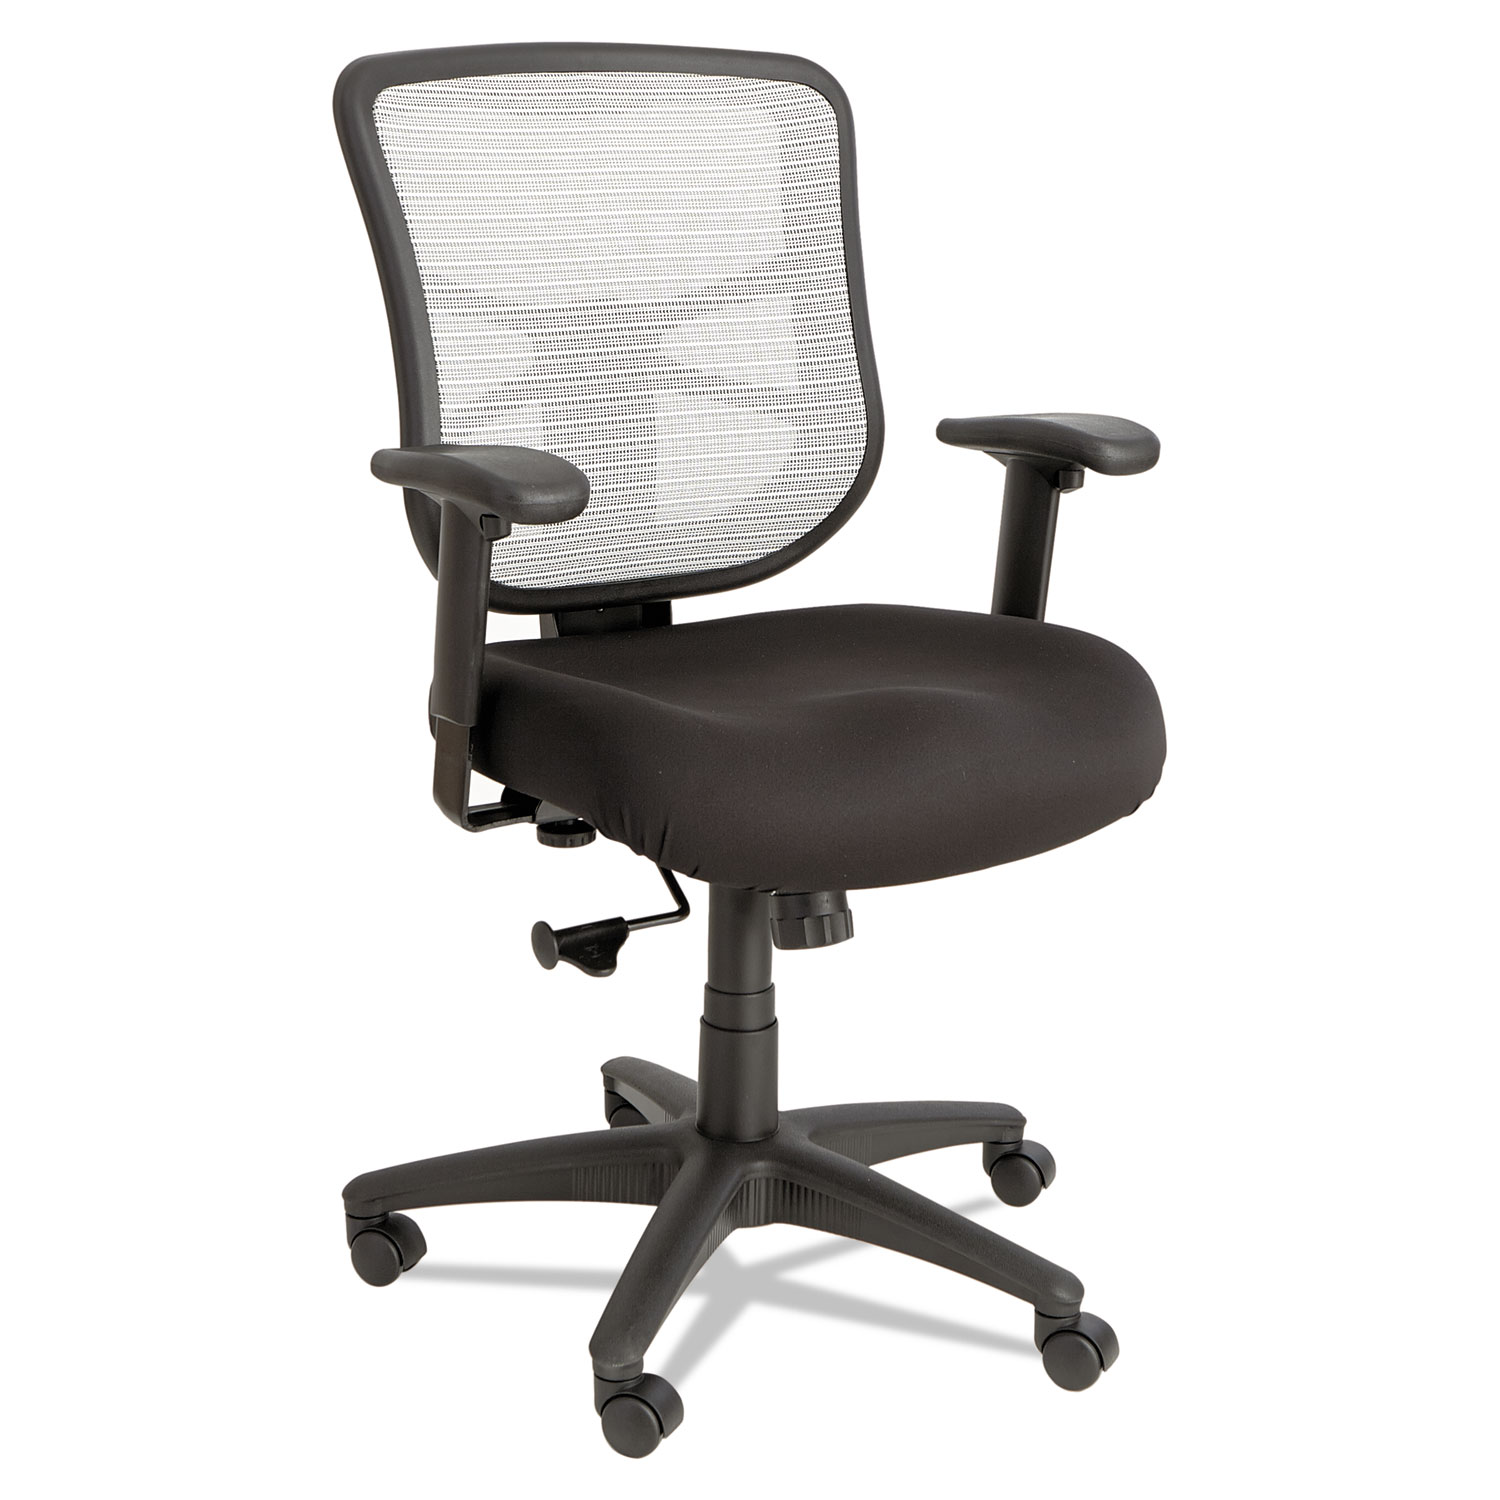  Alera ALEEL42B04 Alera Elusion Series Mesh Mid-Back Swivel/Tilt Chair, Supports up to 275 lbs., Black Seat/White Back, Black Base (ALEEL42B04) 